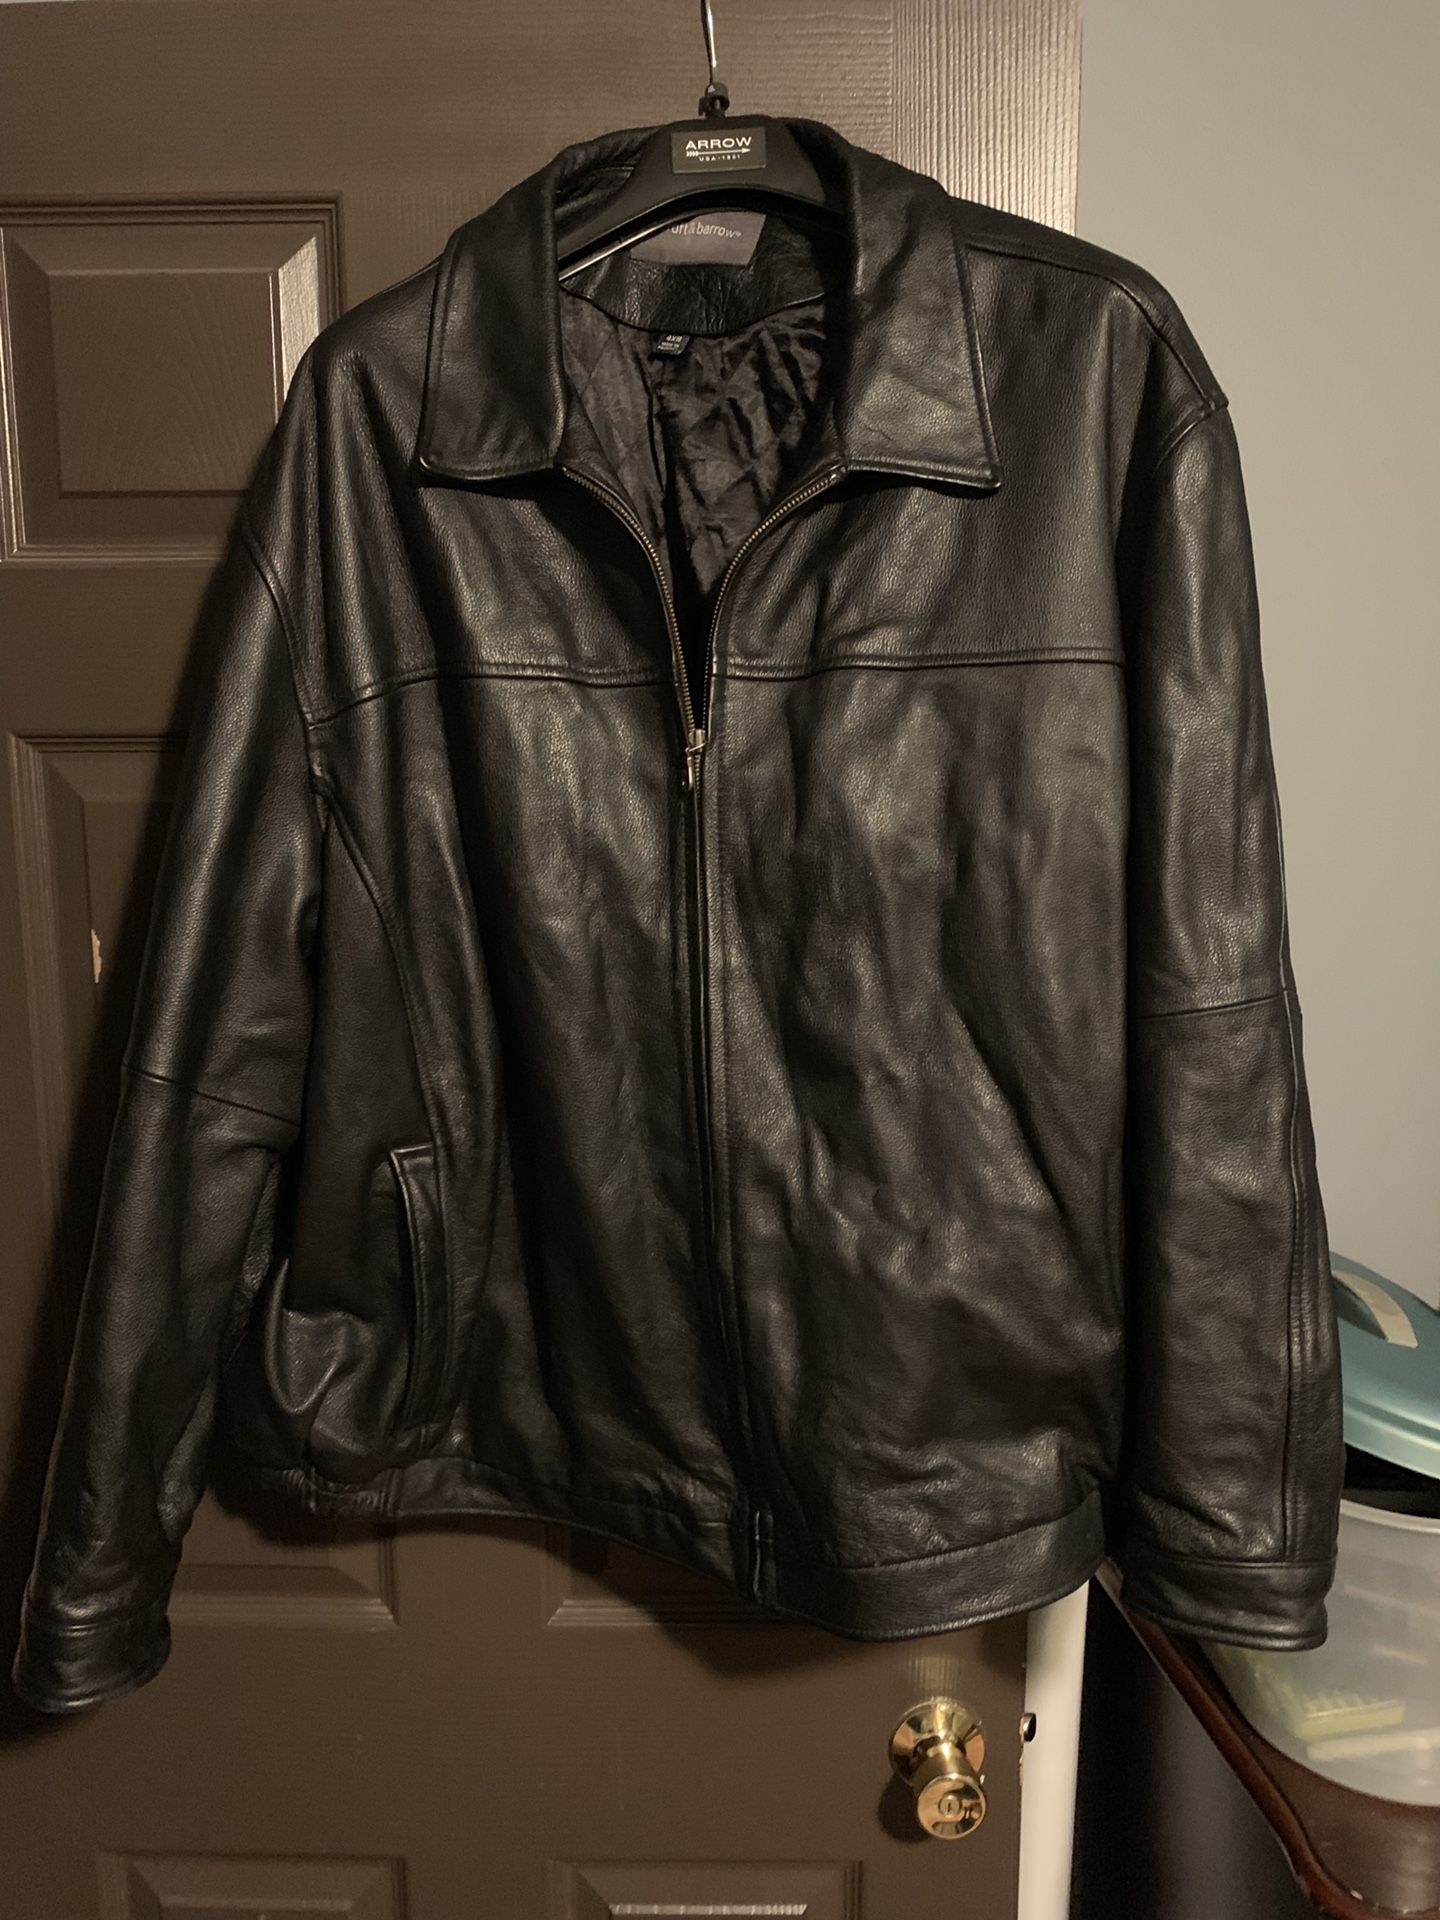 4xl b men’s leather jacket good condition $65